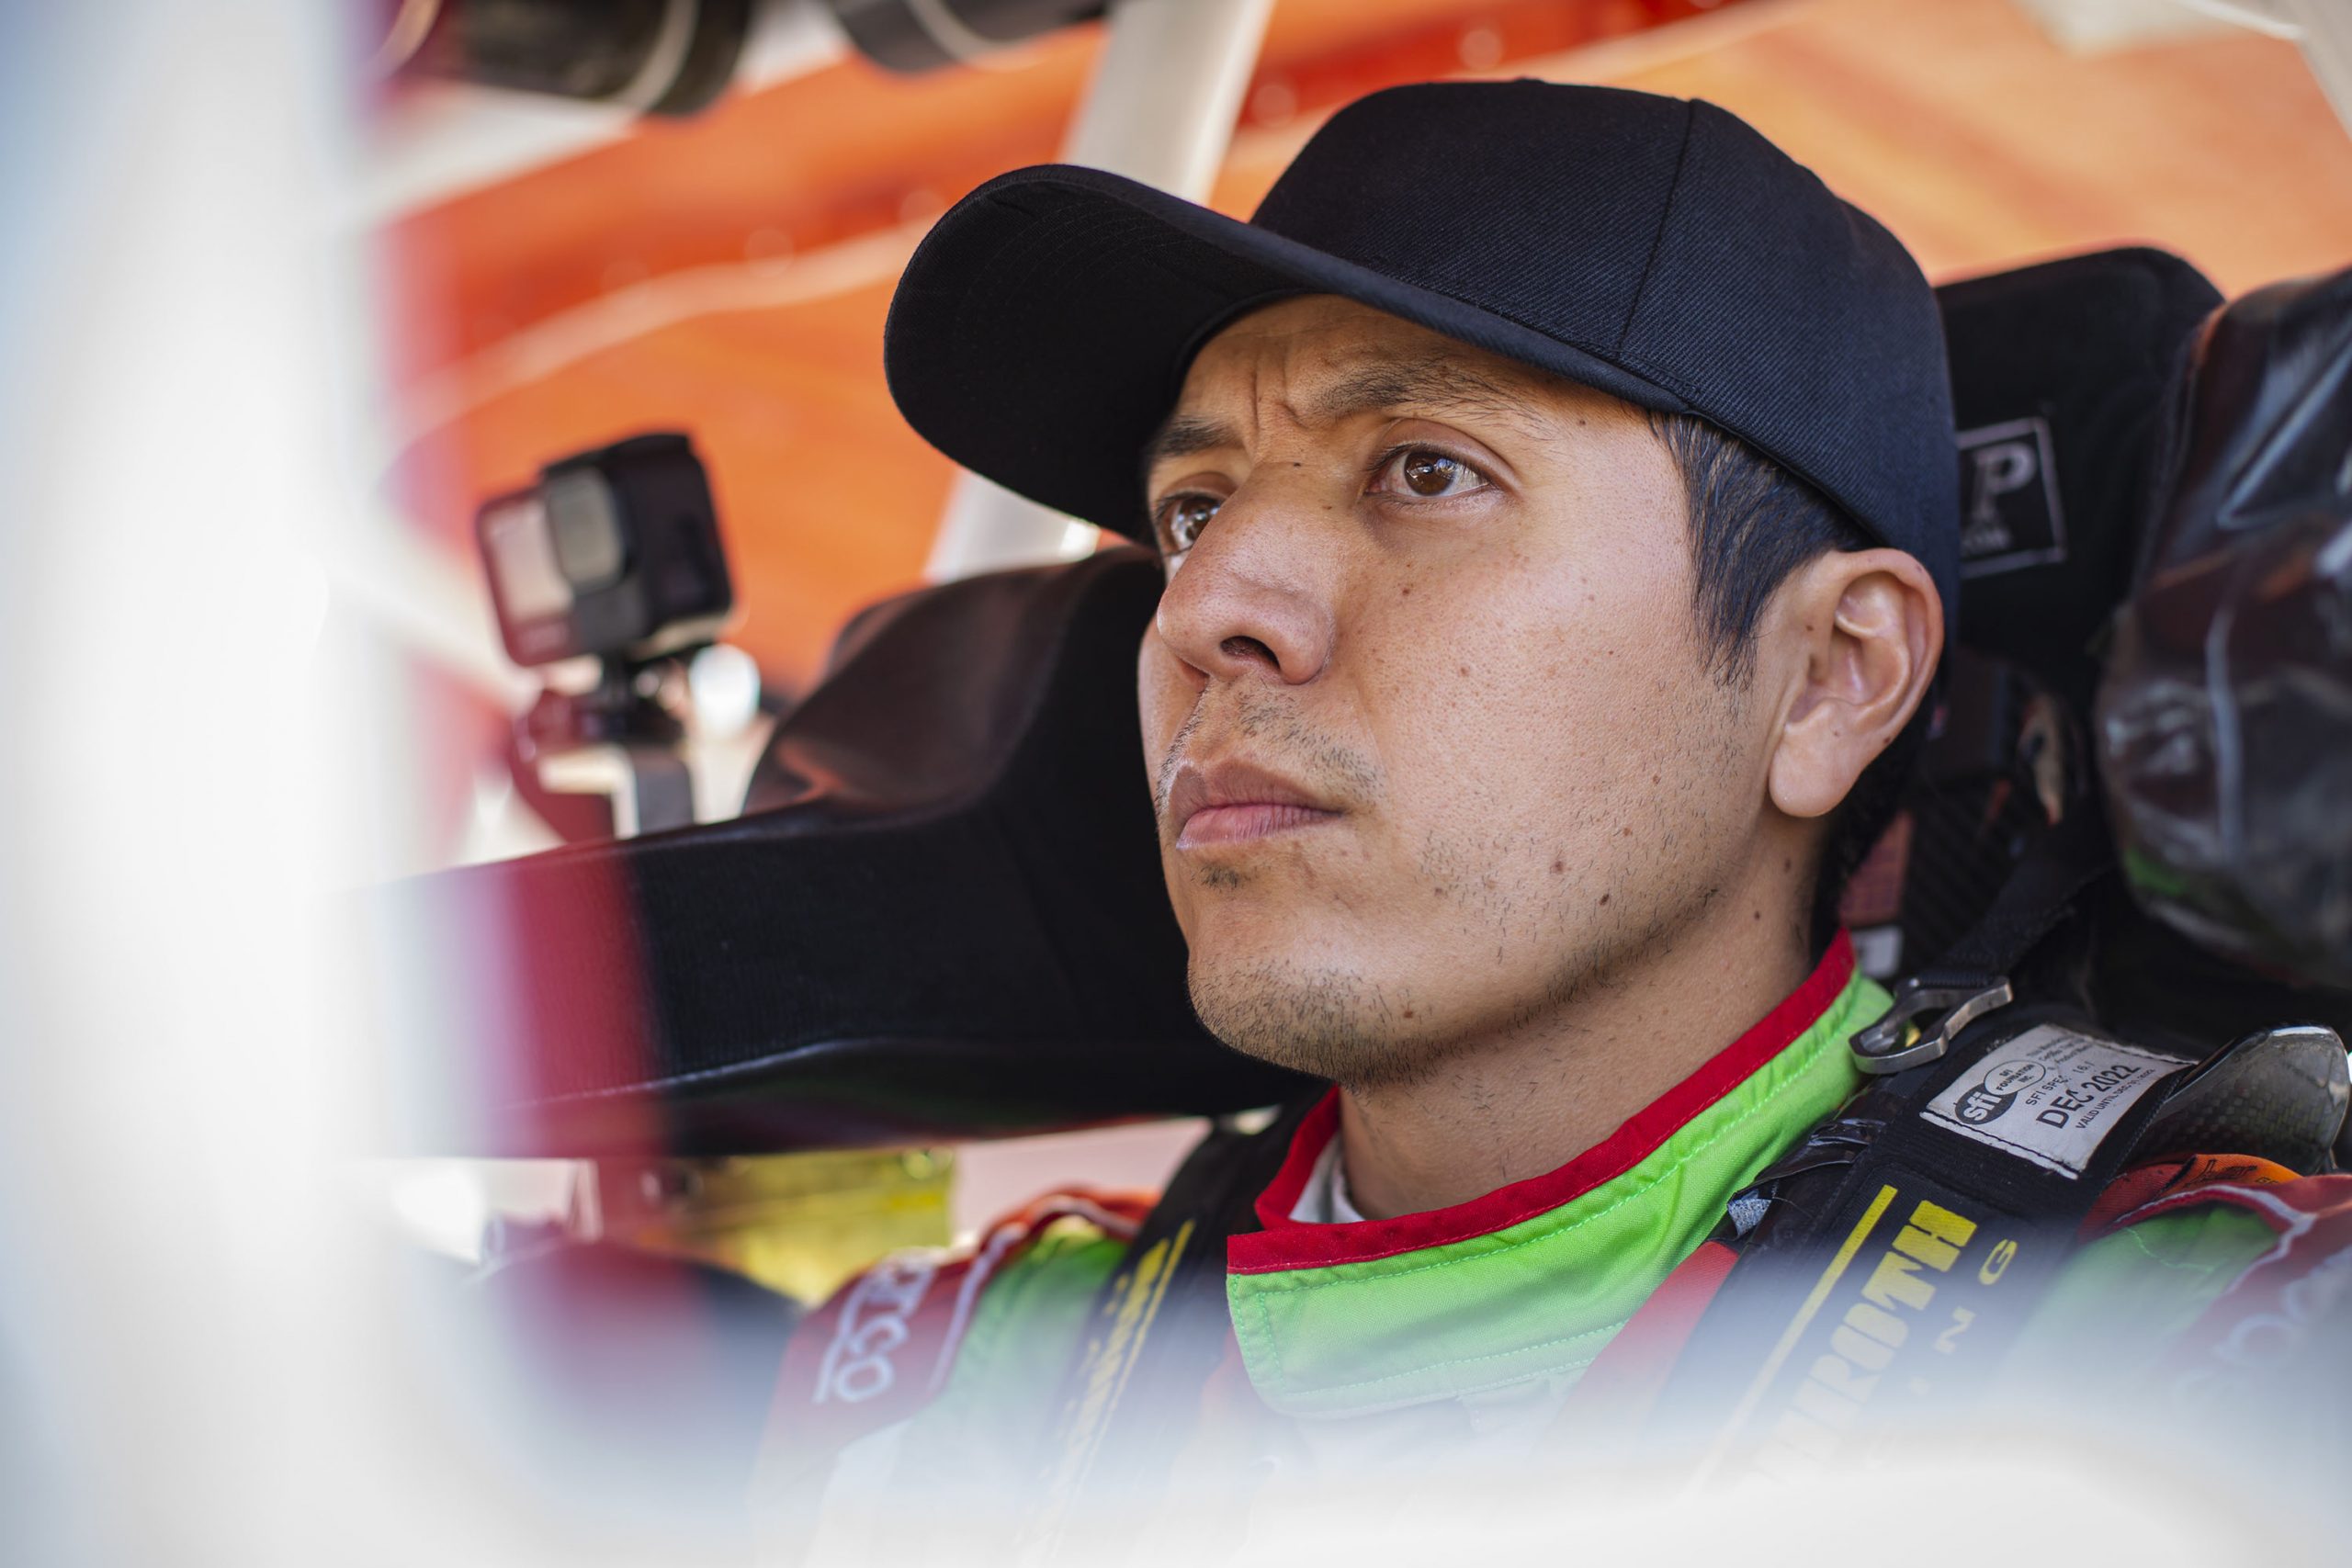 Enrique Baca completa alineación del Sidral Aga Racing Team en NASCAR México Series 2022